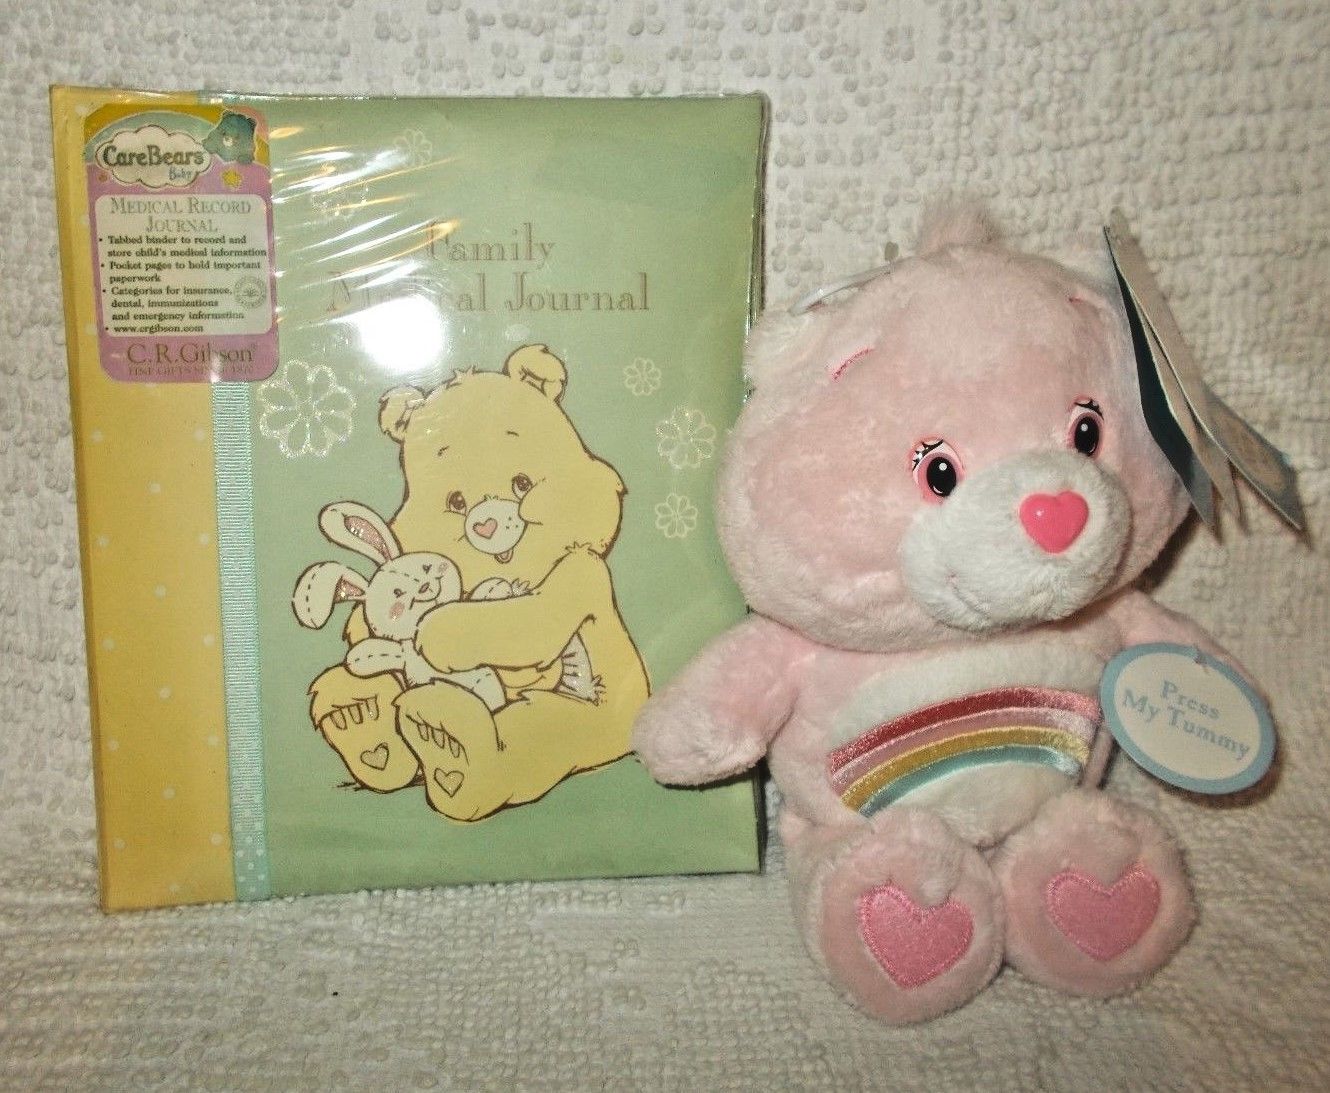 Care Bear Baby Talking Cheer Bear Stuffed Plush & Family Medical Journal Book 